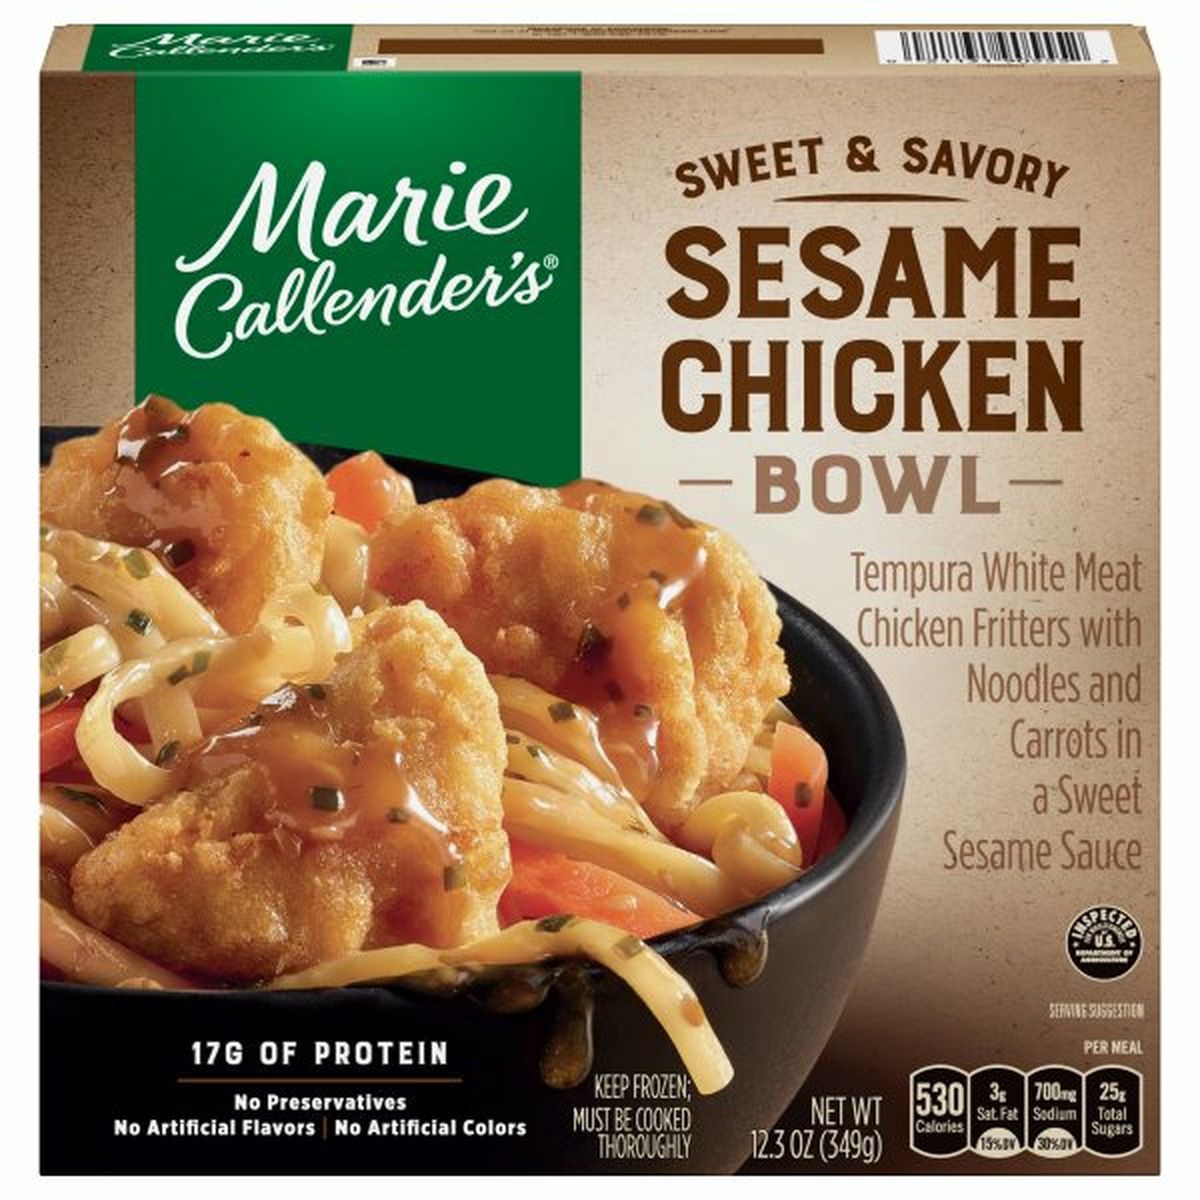 Calories in Marie Callender's Sesame Chicken Bowl, Sweet & Savory